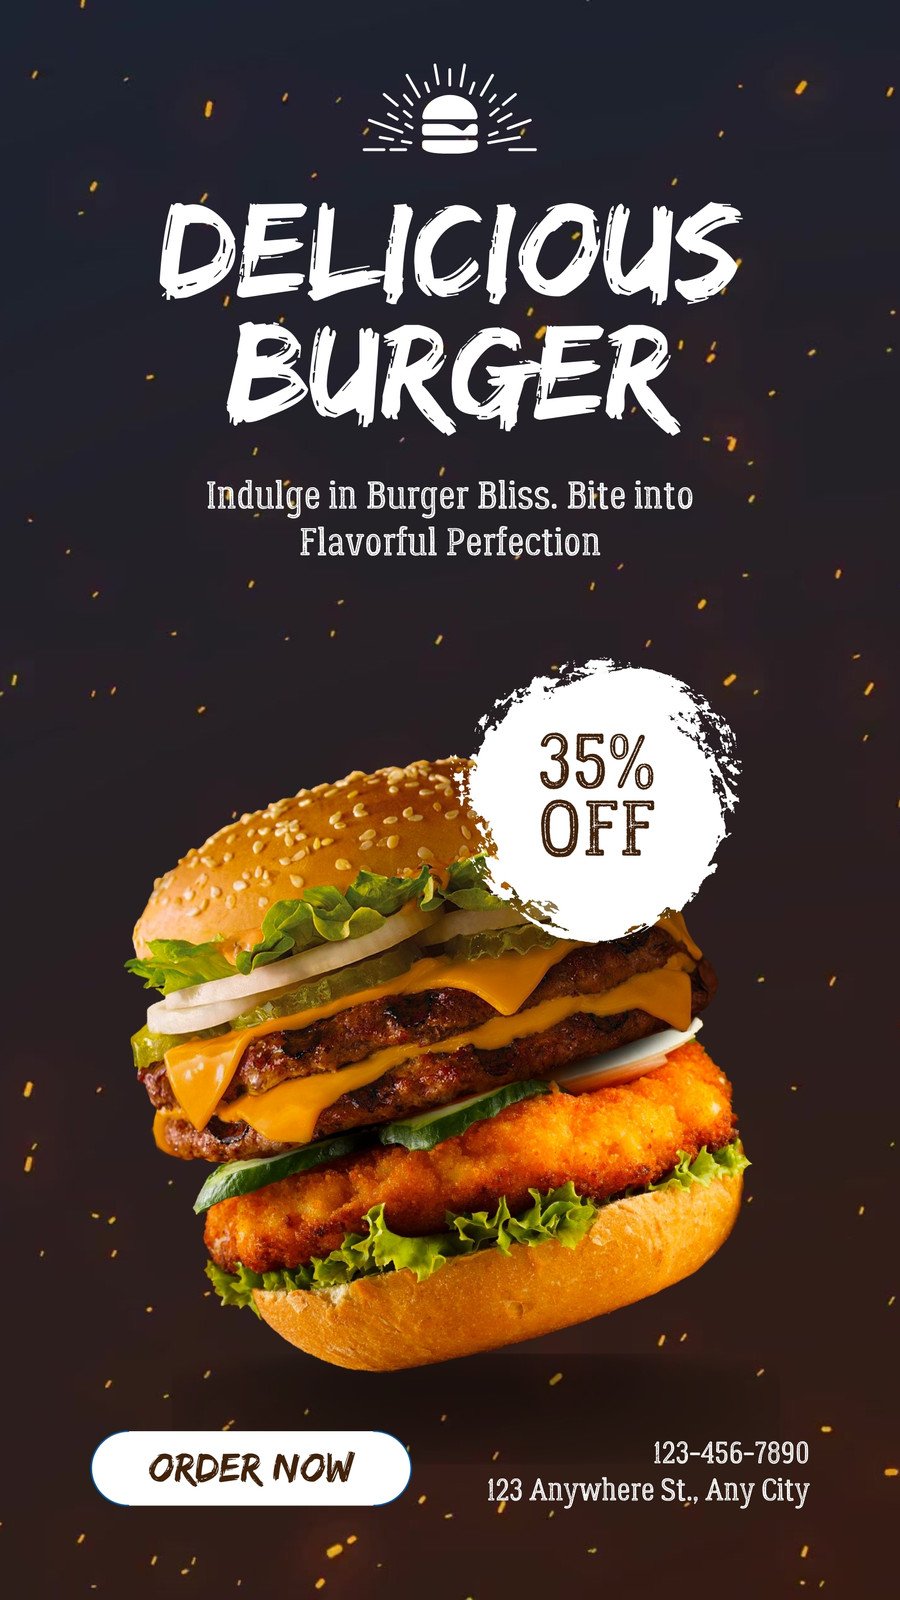 Burger Branding Projects :: Photos, videos, logos, illustrations